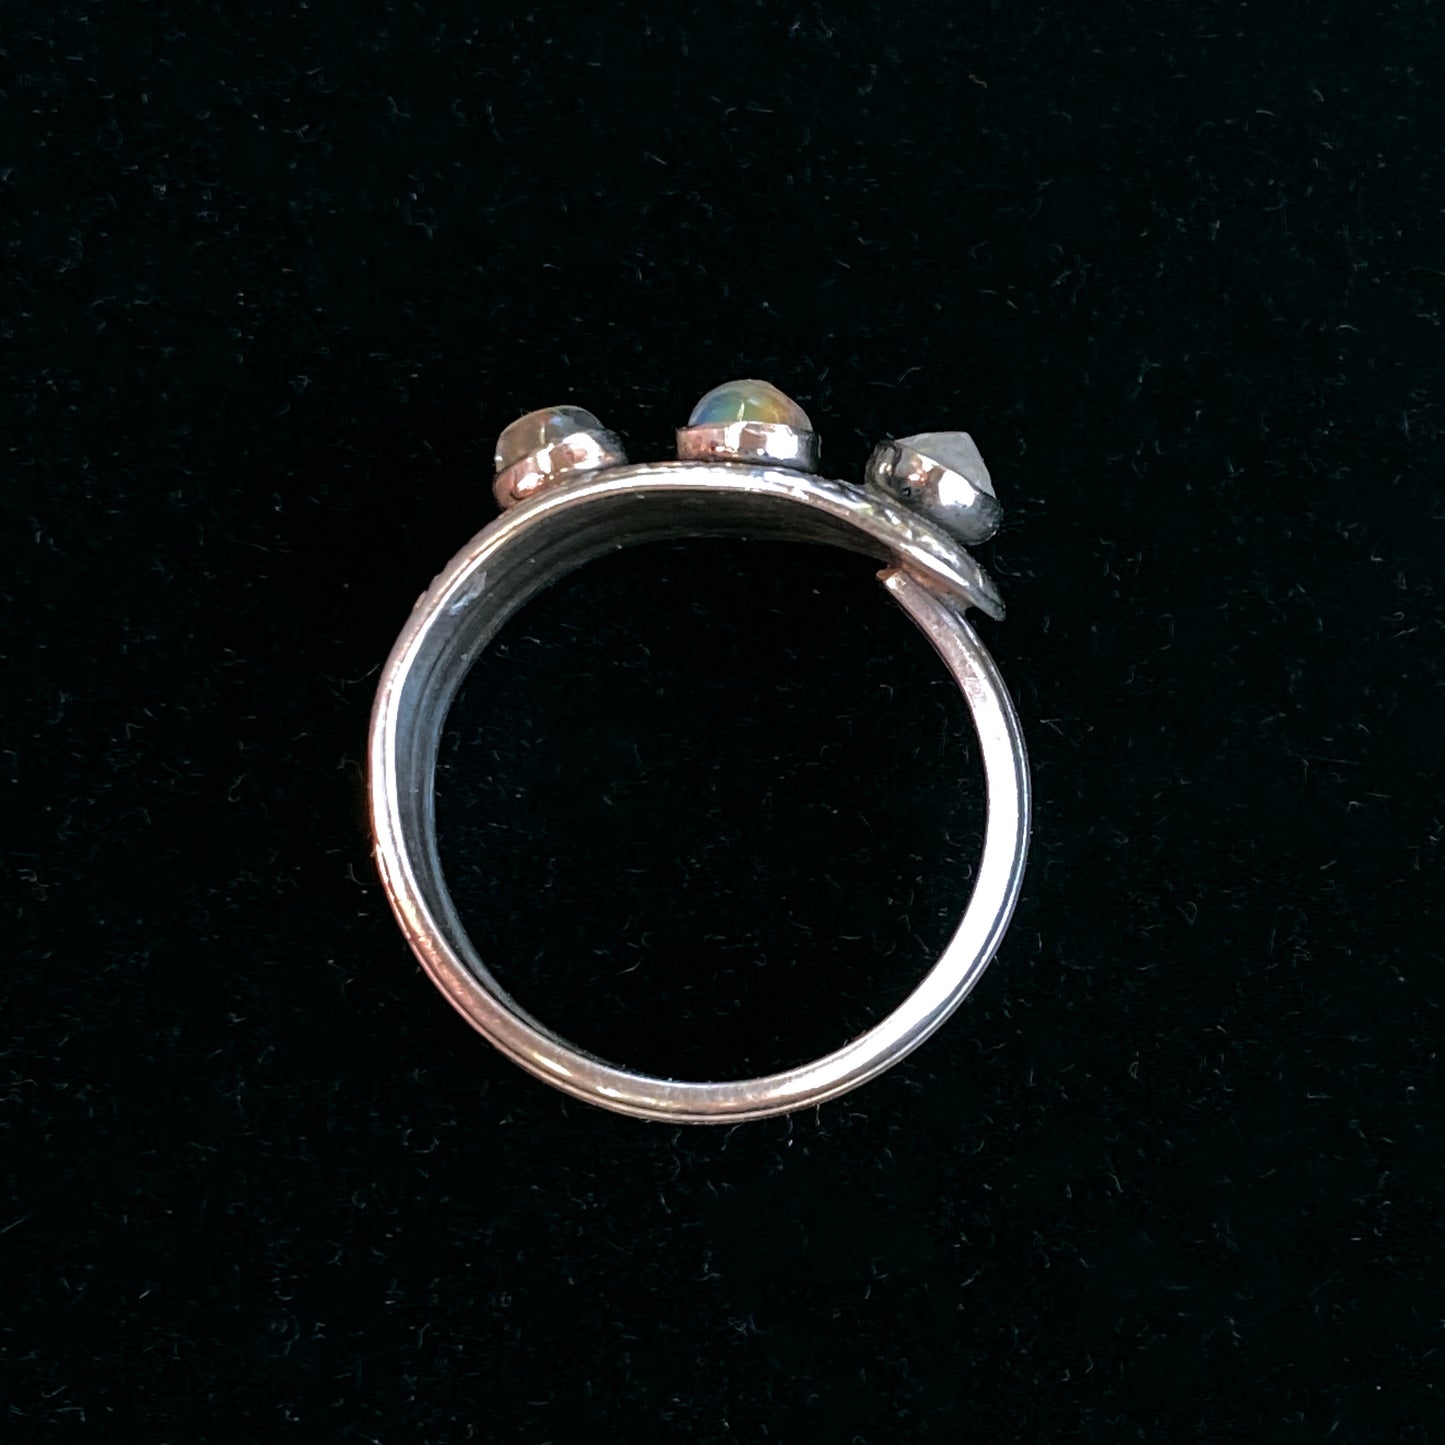 Vintage Sterling Silver Spoon Ring with Moonstone gemstones.